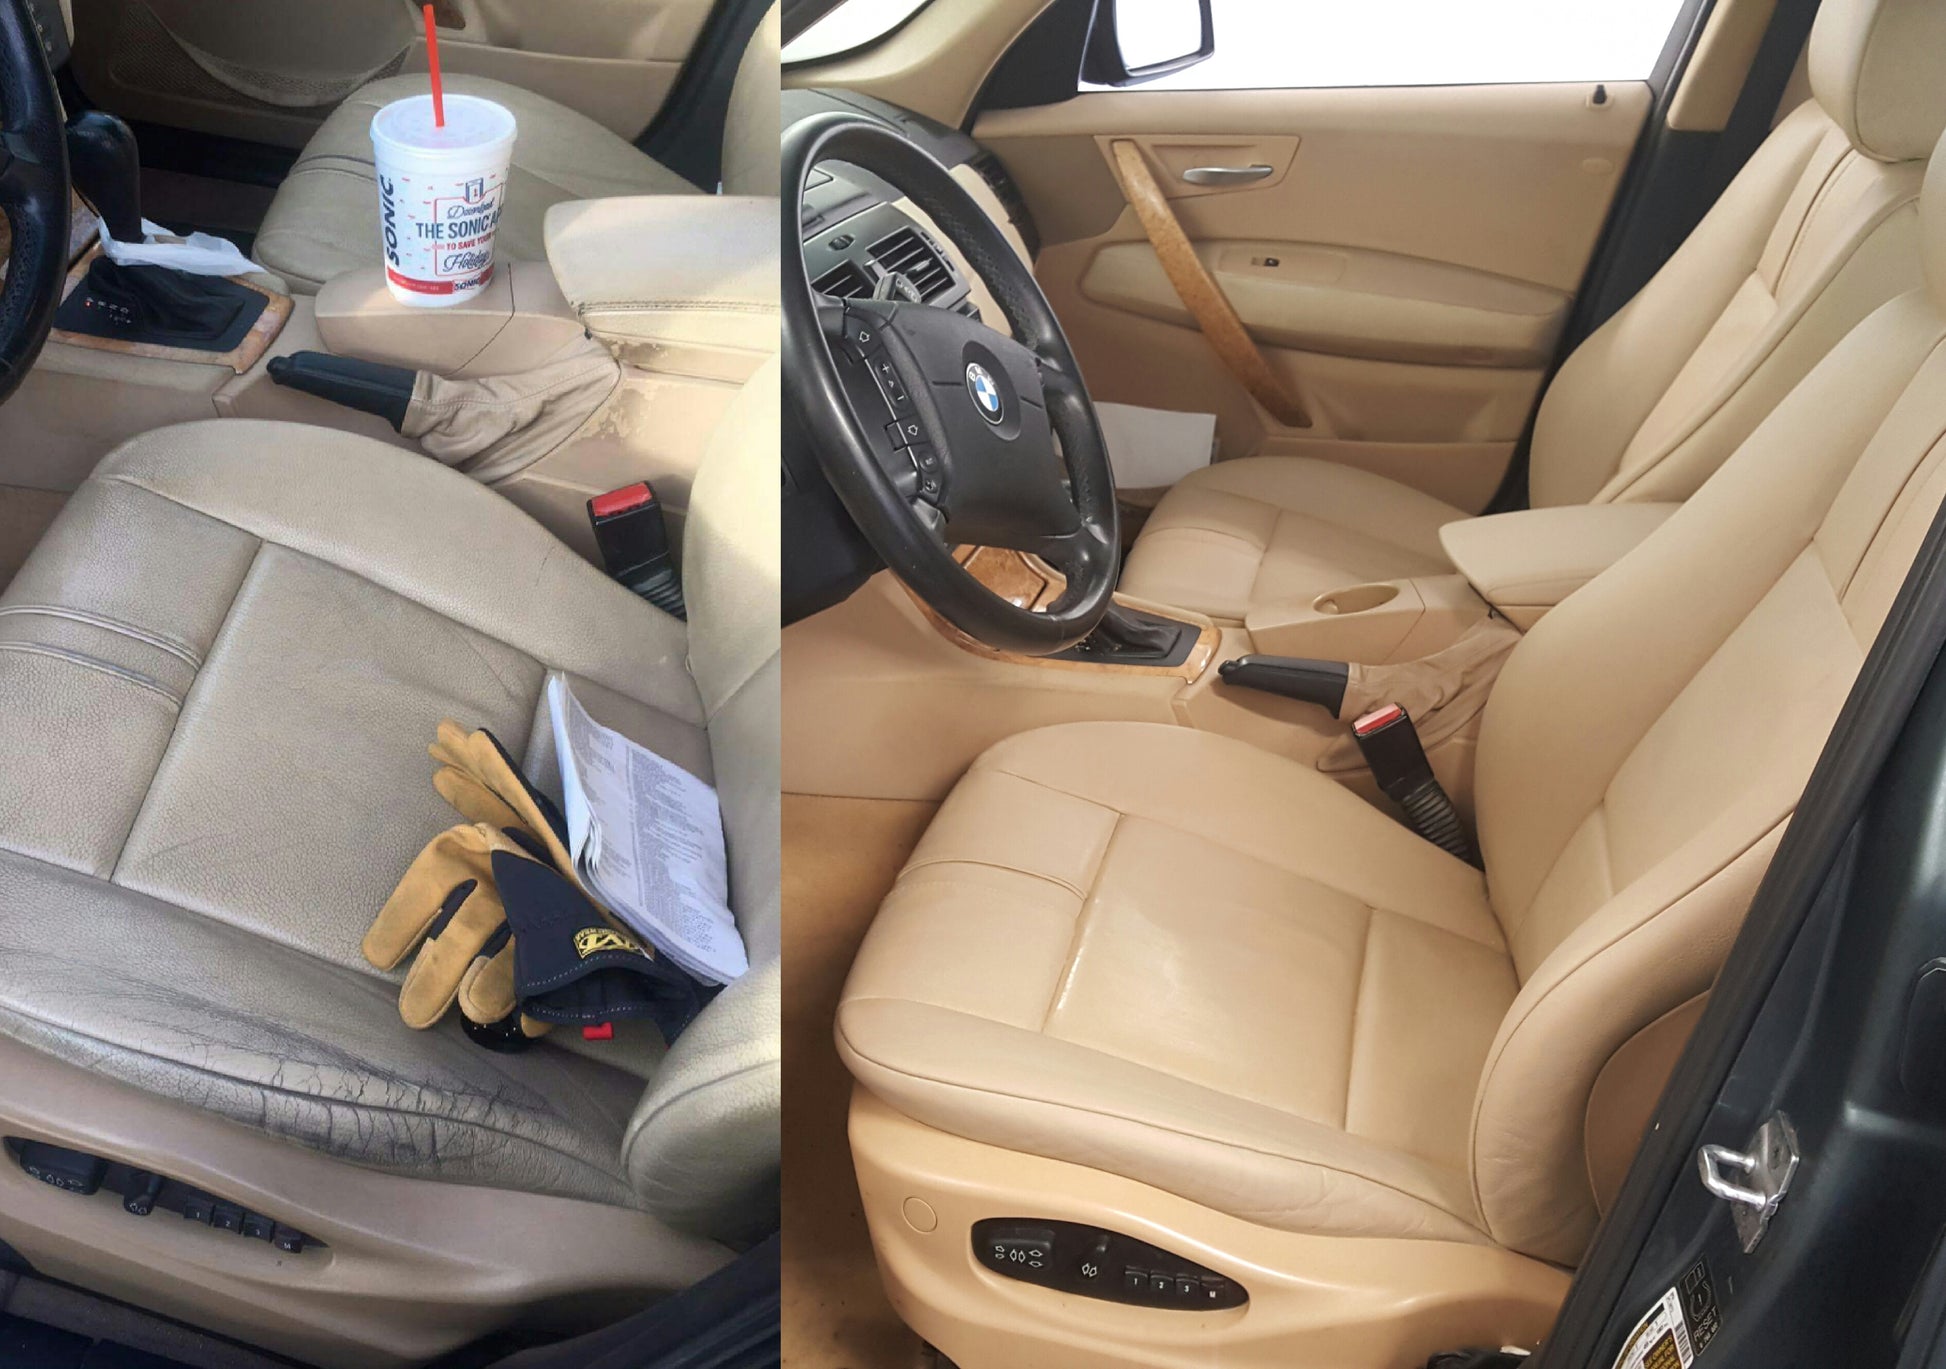 luxury pvc leather custom car seat